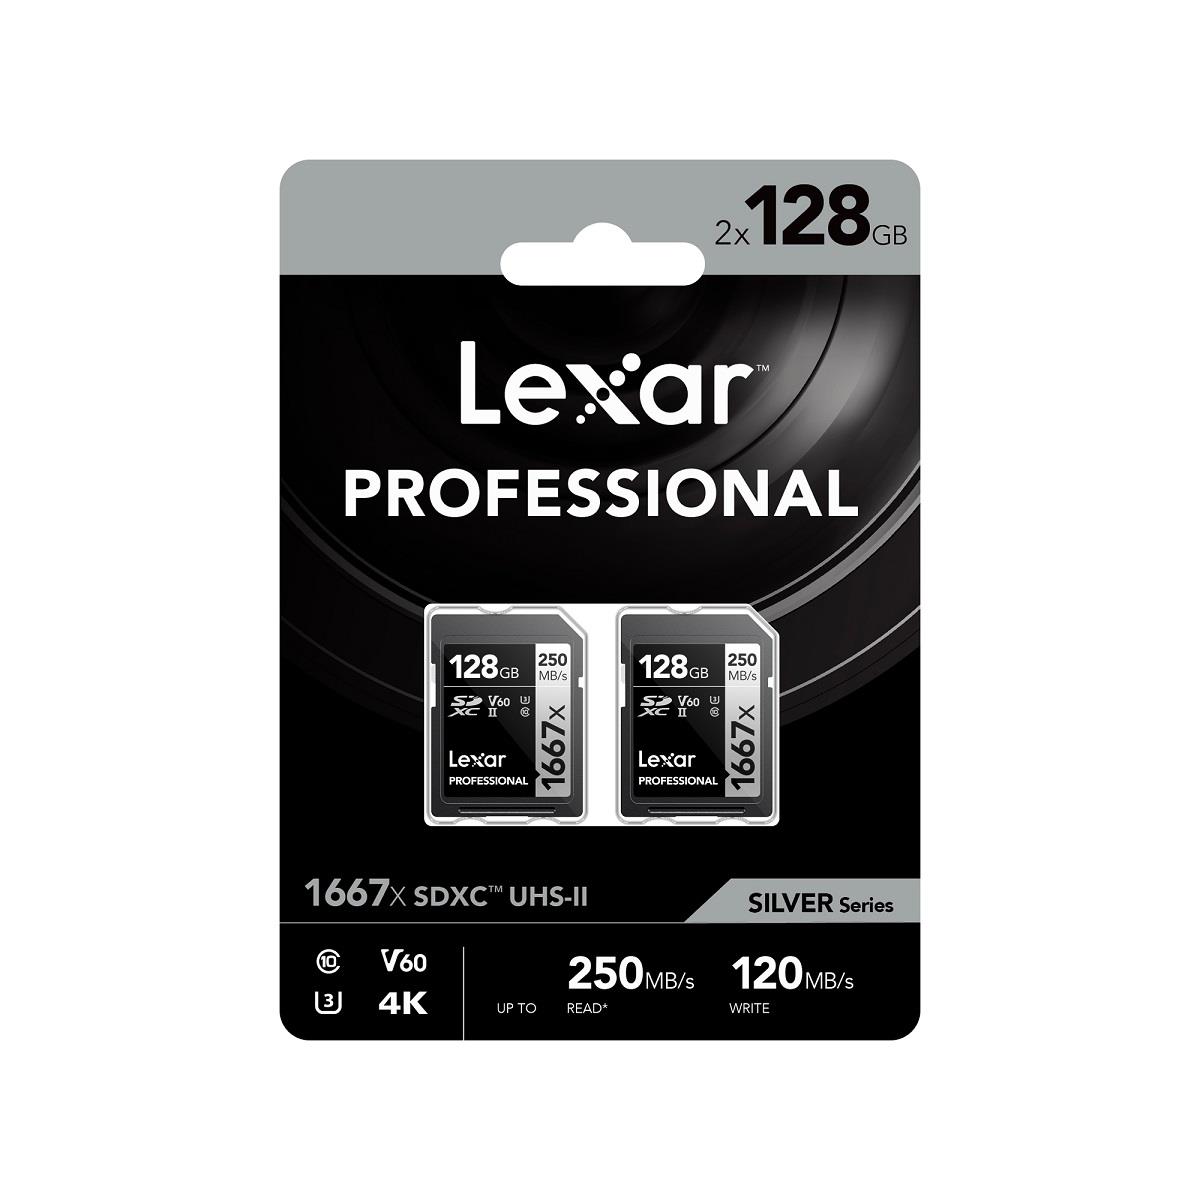 Lexar SD Pro Silver Series UHS-II 1667x 128GB V60 - 2PACK